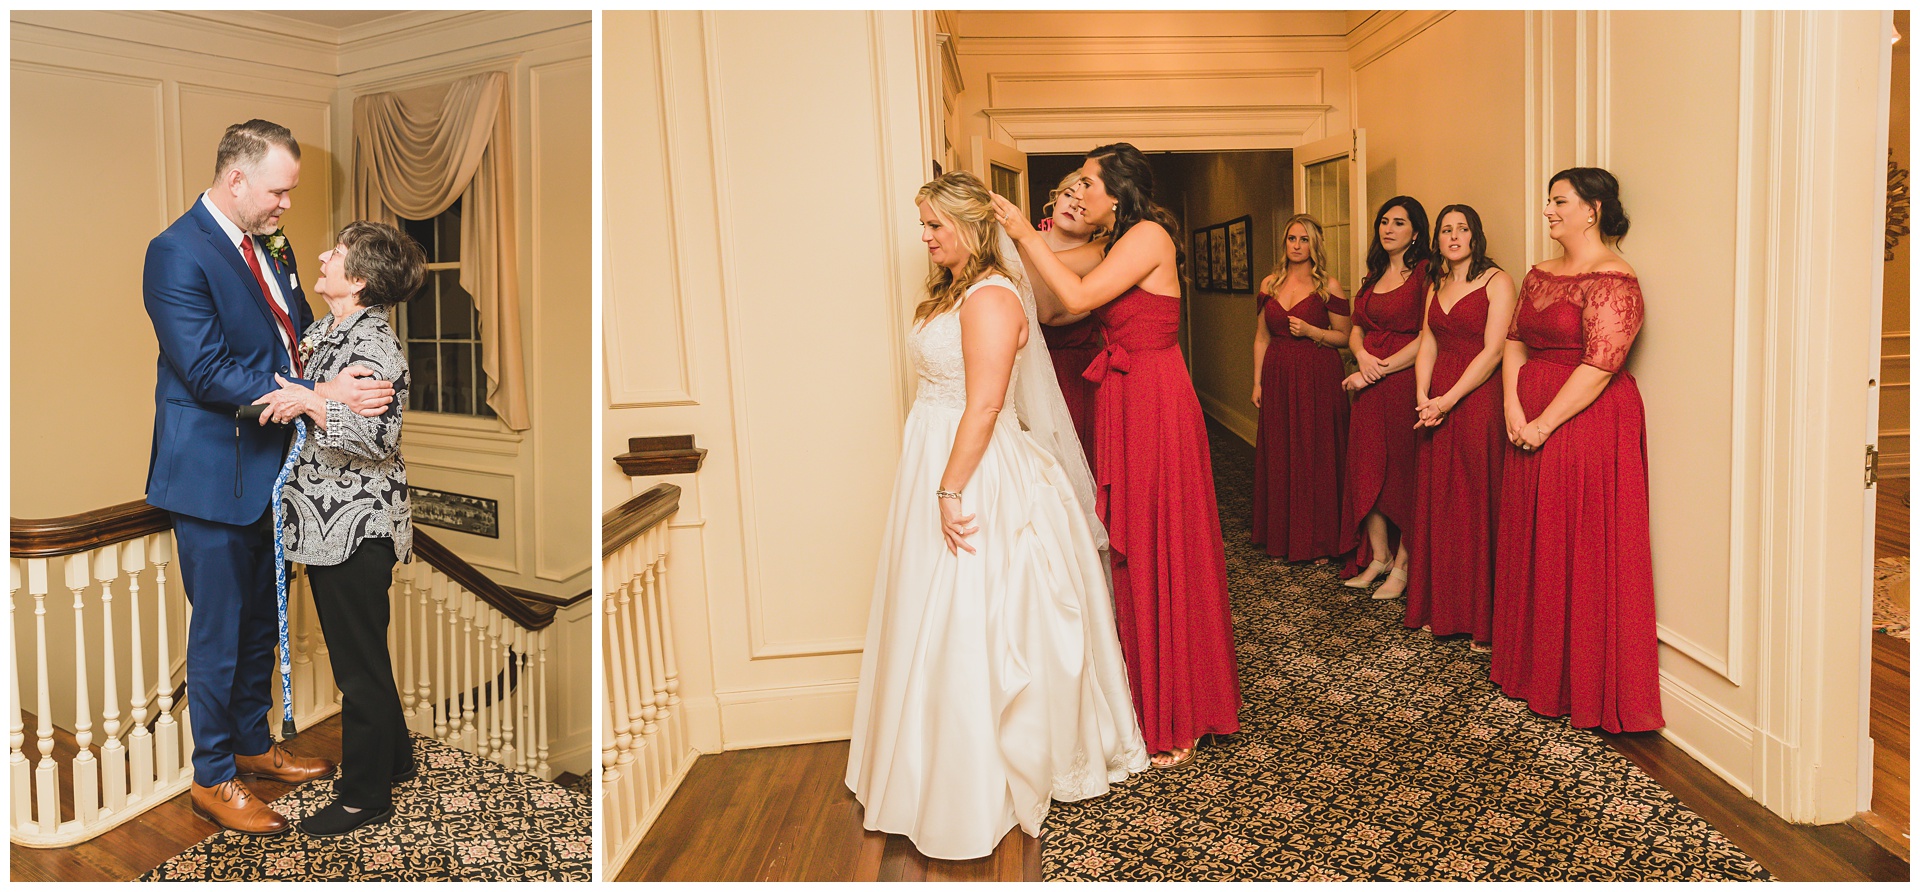 Wedding photography at The Historic Longview Mansion by Kansas City wedding photographers Wisdom-Watson Weddings.